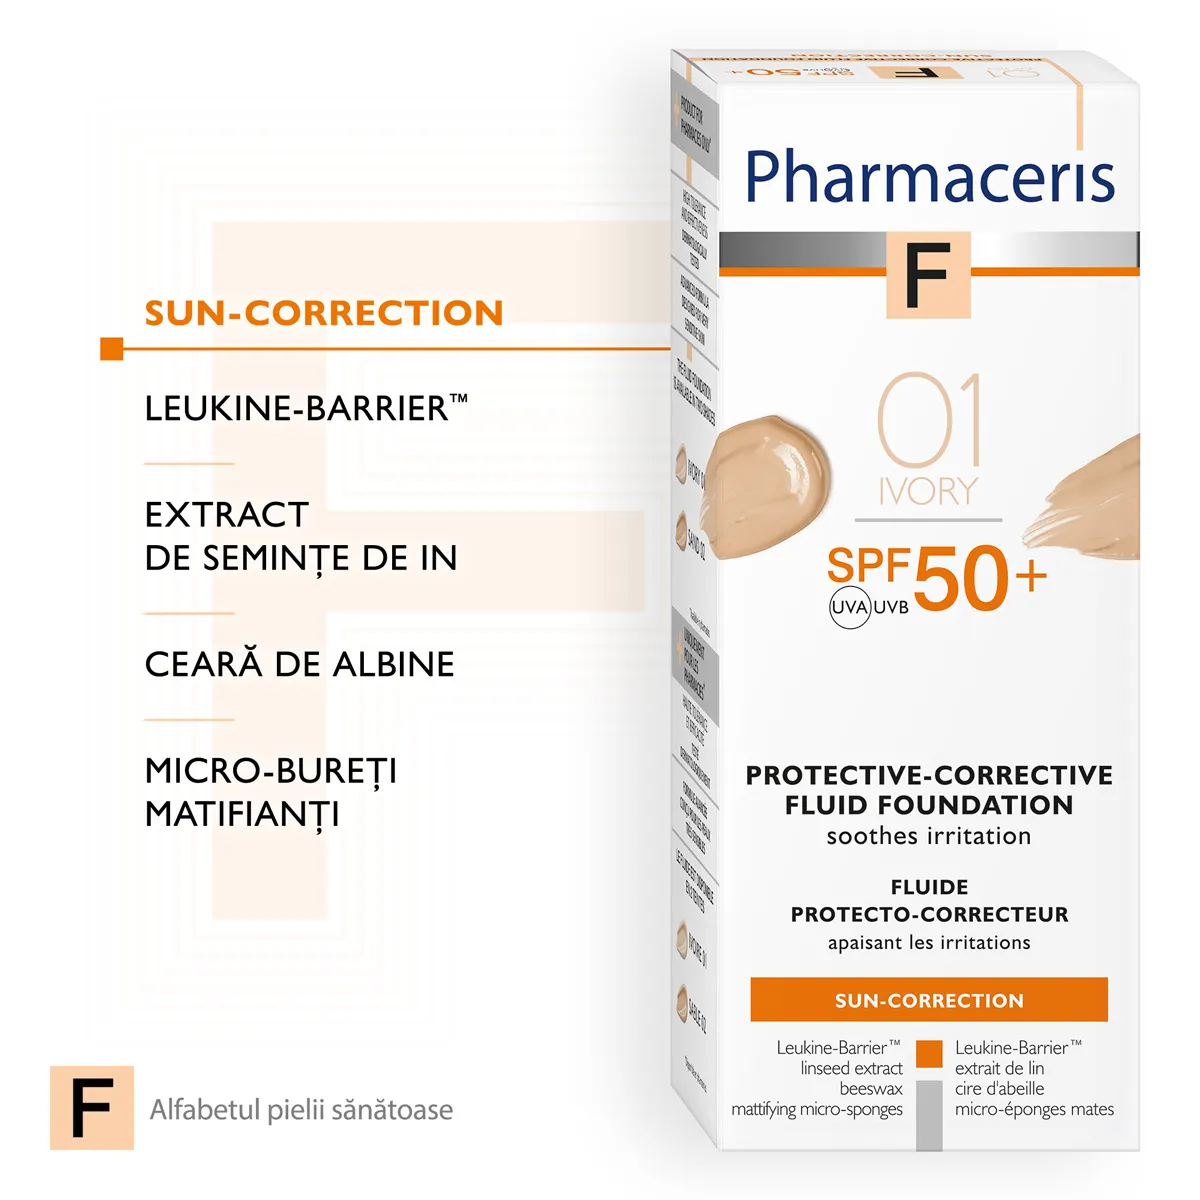 Fond de ten fluid Protective-Corective SPF50 01 Ivory F, 30ml, Pharmaceris 